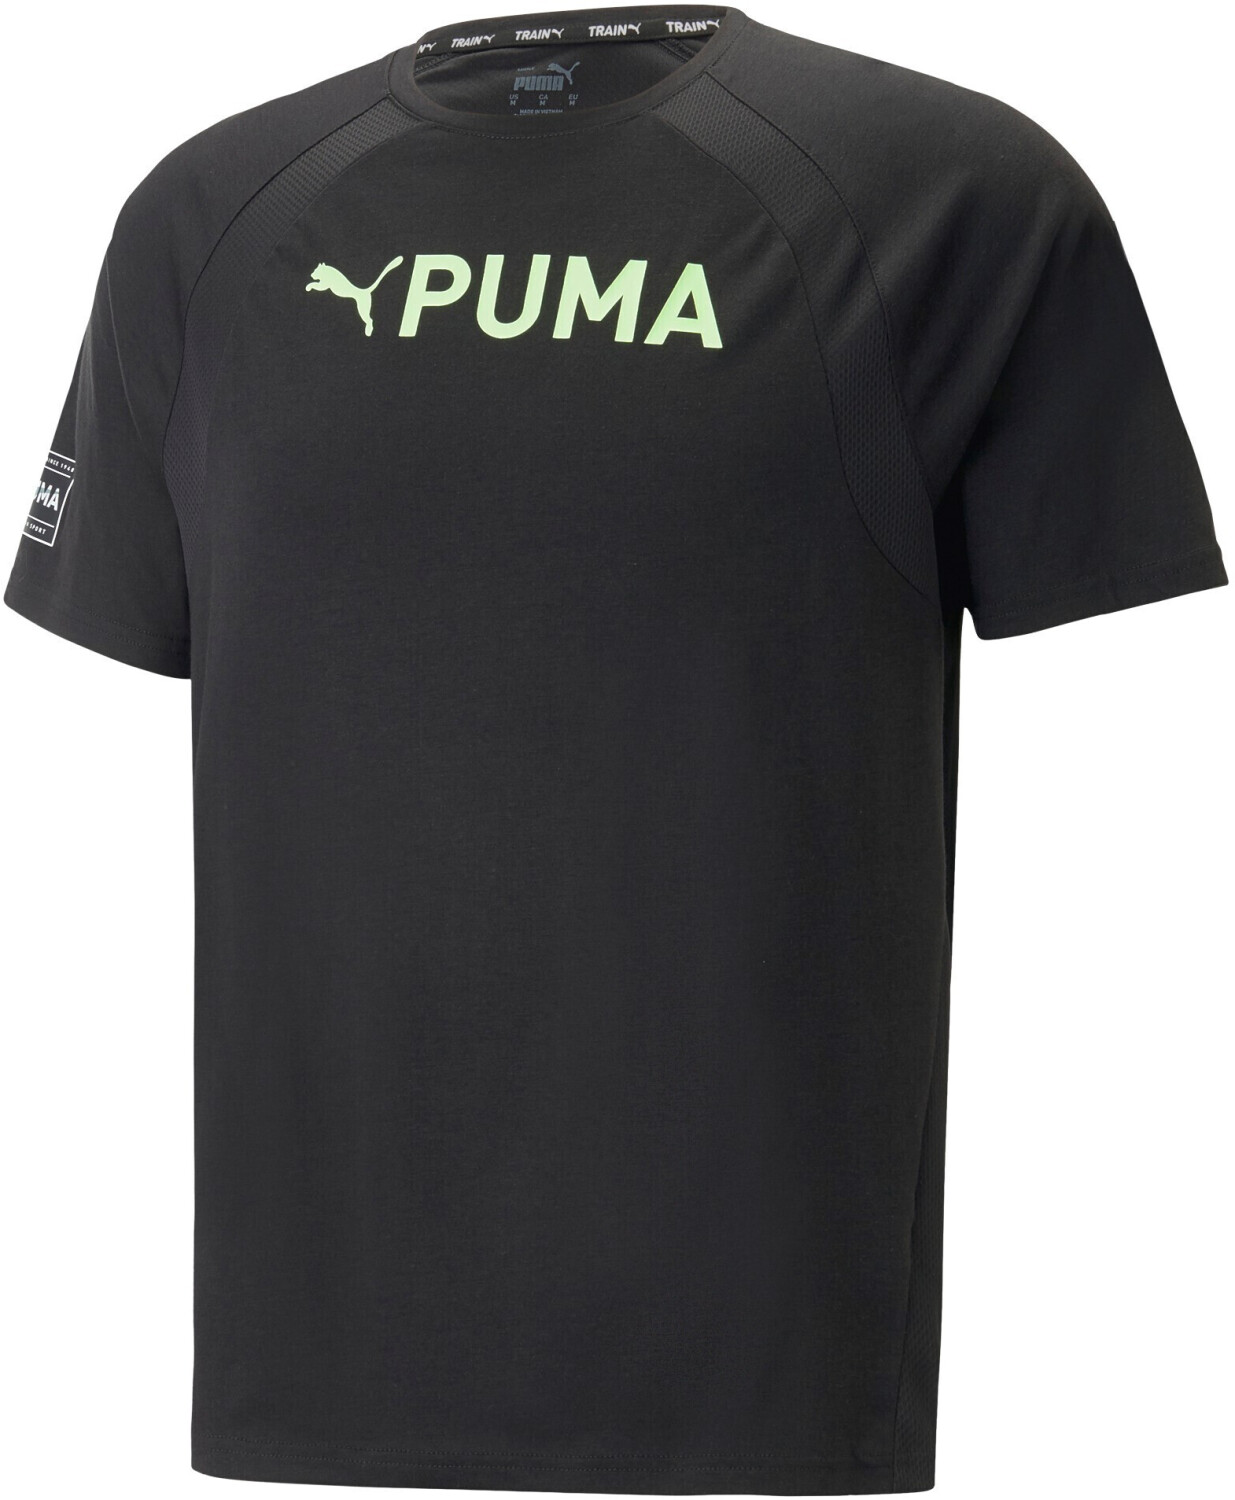 20,17 Puma bei € black/fizzy | ab lime Preisvergleich Fit puma Ultrabreathe Tee Triblend